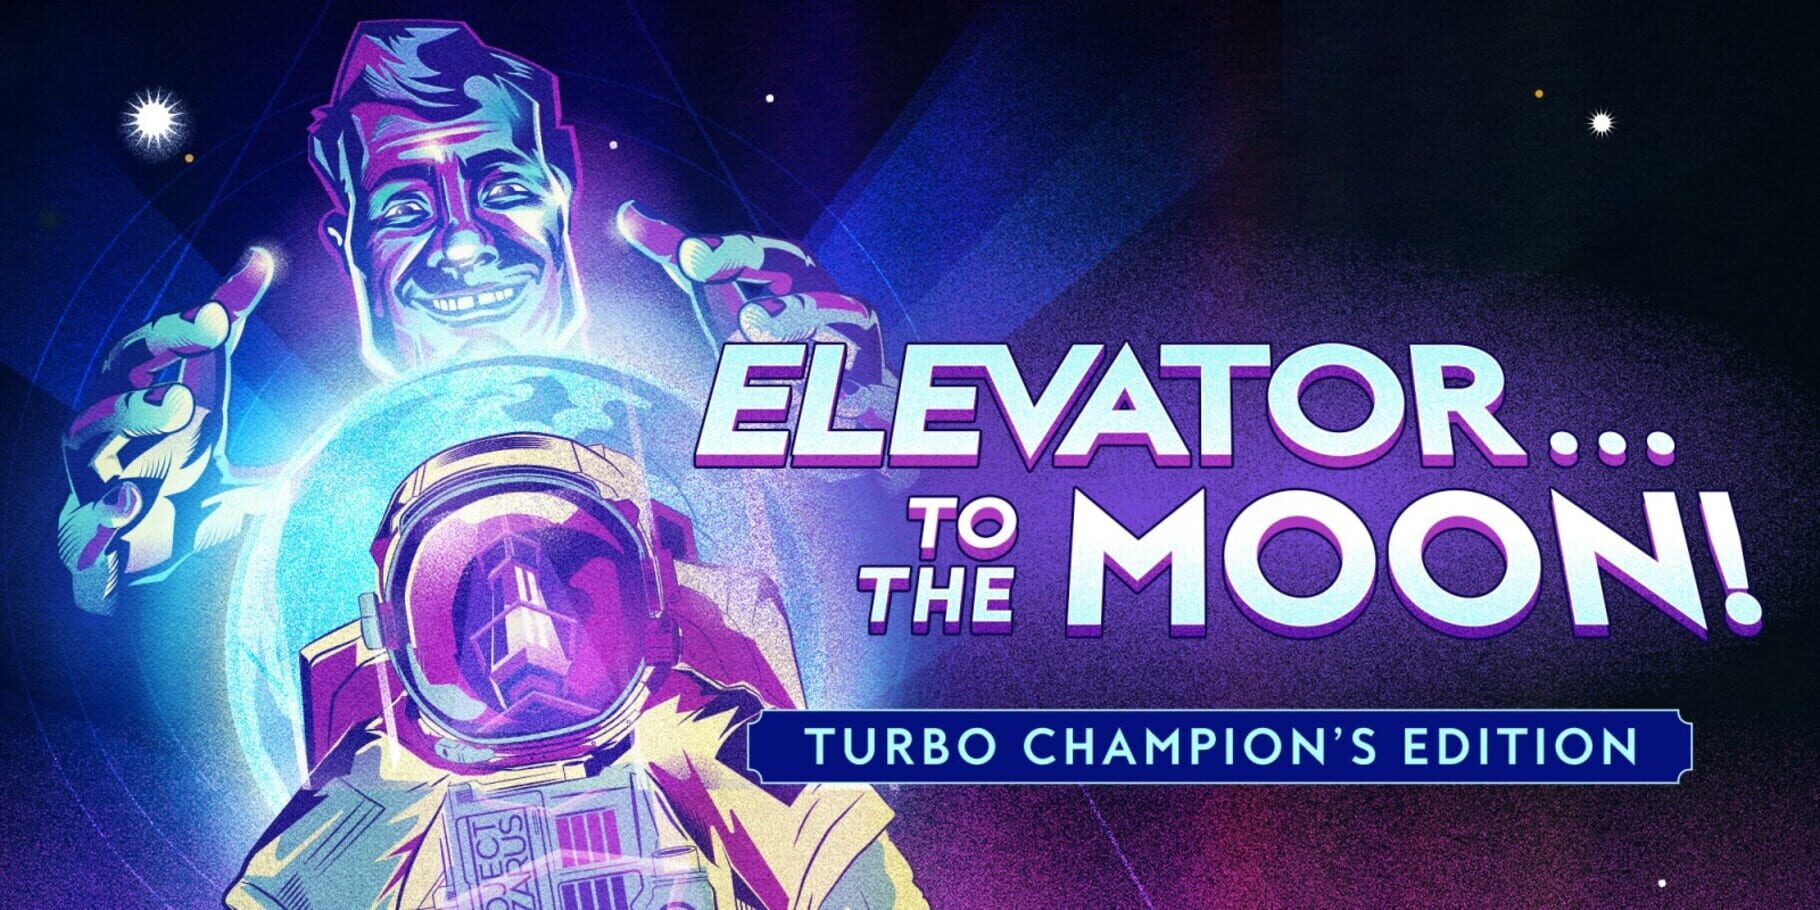 Elevator...to the Moon!: Turbo Champion's Edition artwork